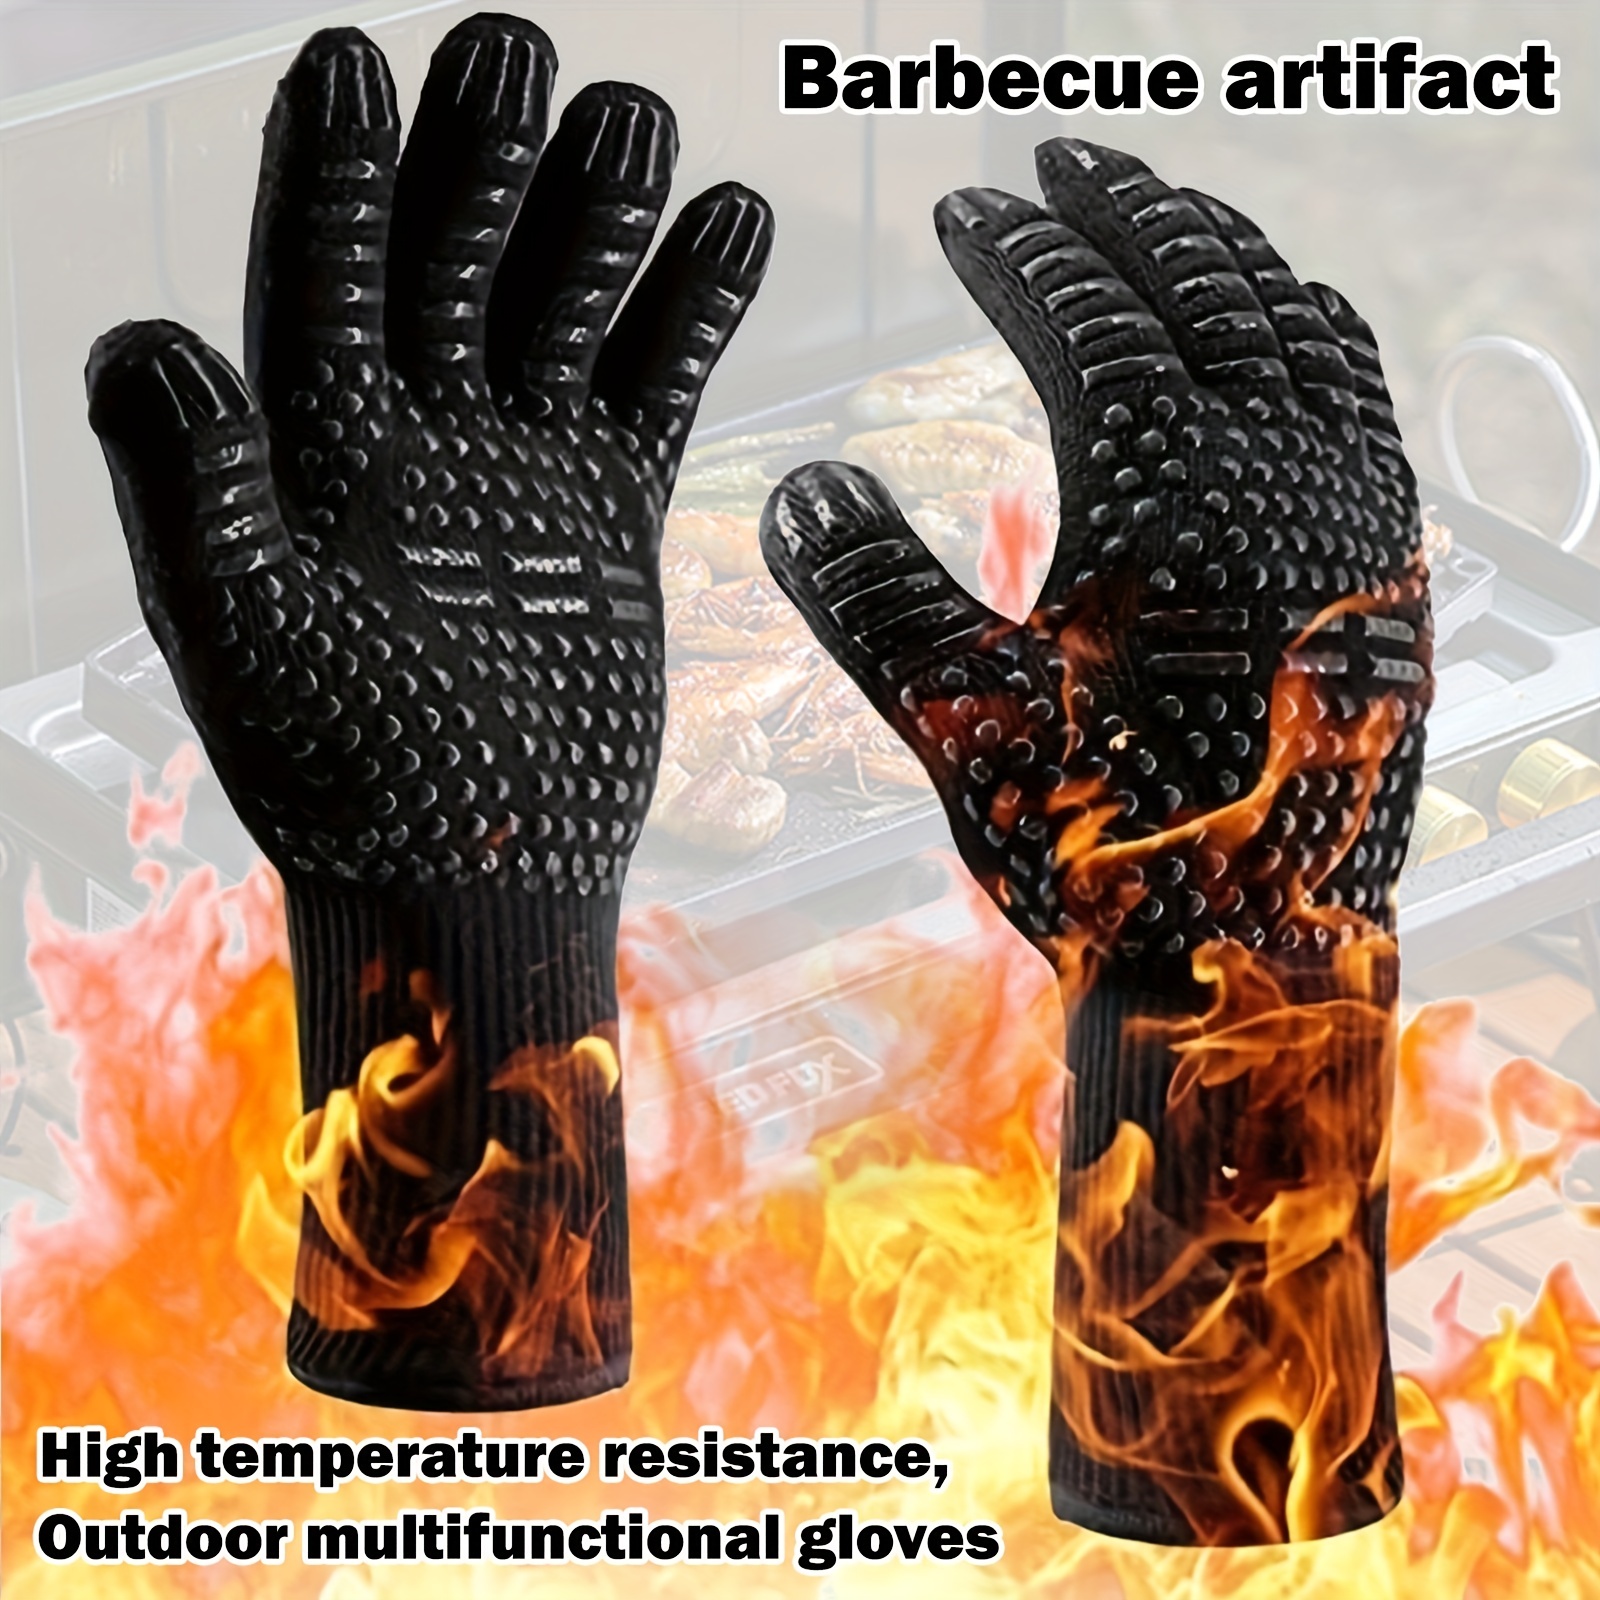 https://img.kwcdn.com/product/heat-resistant-oven-gloves/d69d2f15w98k18-4152acc2/Fancyalgo/VirtualModelMatting/a7647733e09d2295a235af26d2e4f809.jpg